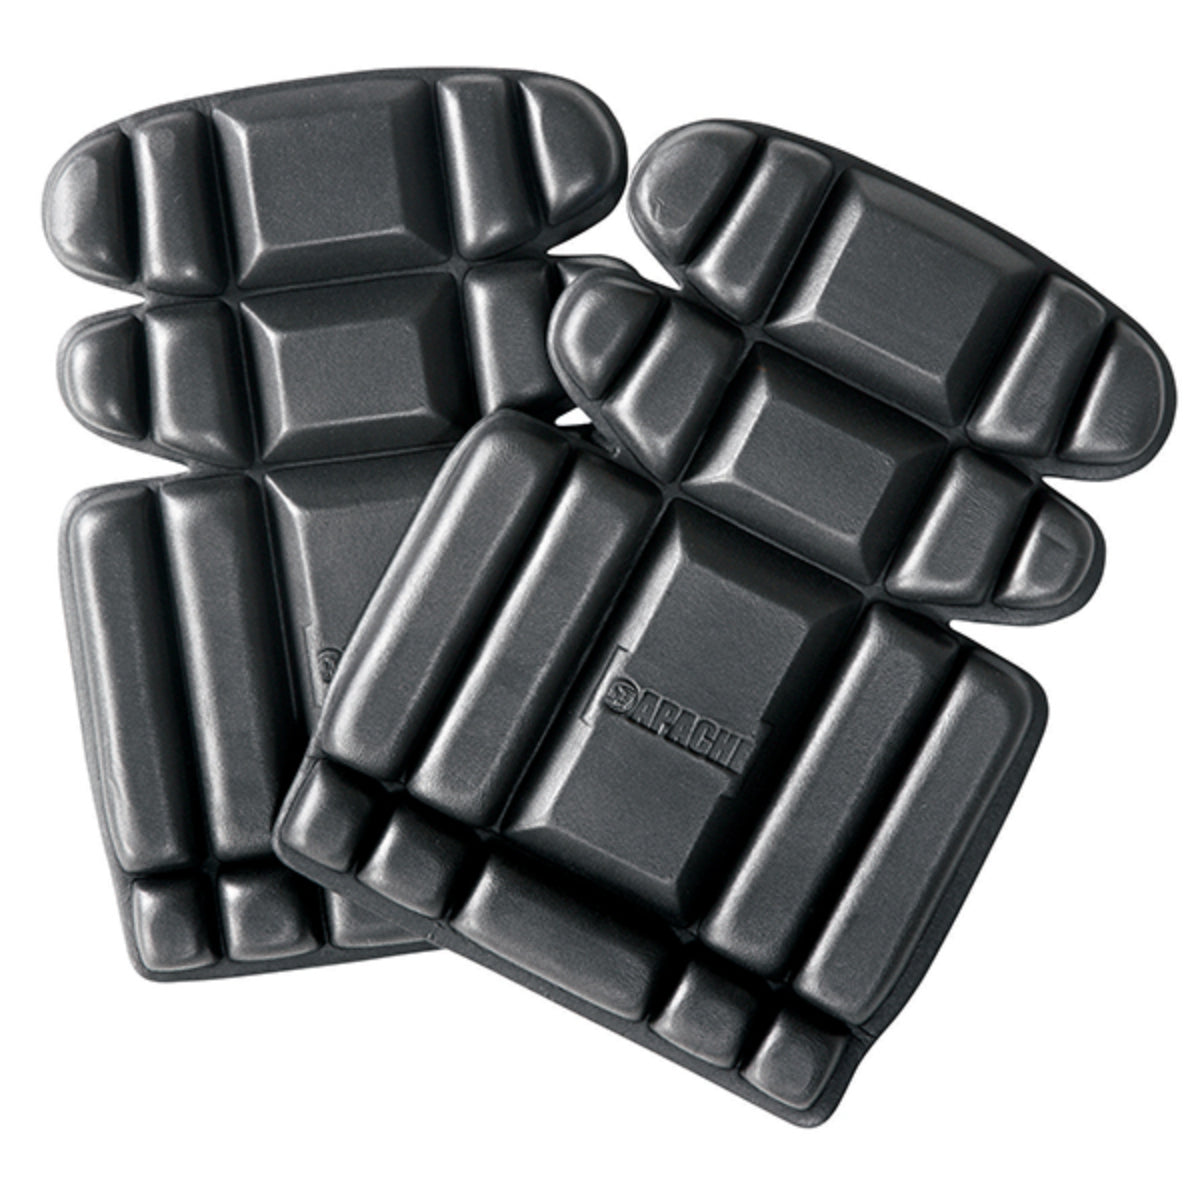 Apache Black ergonomic knee pads